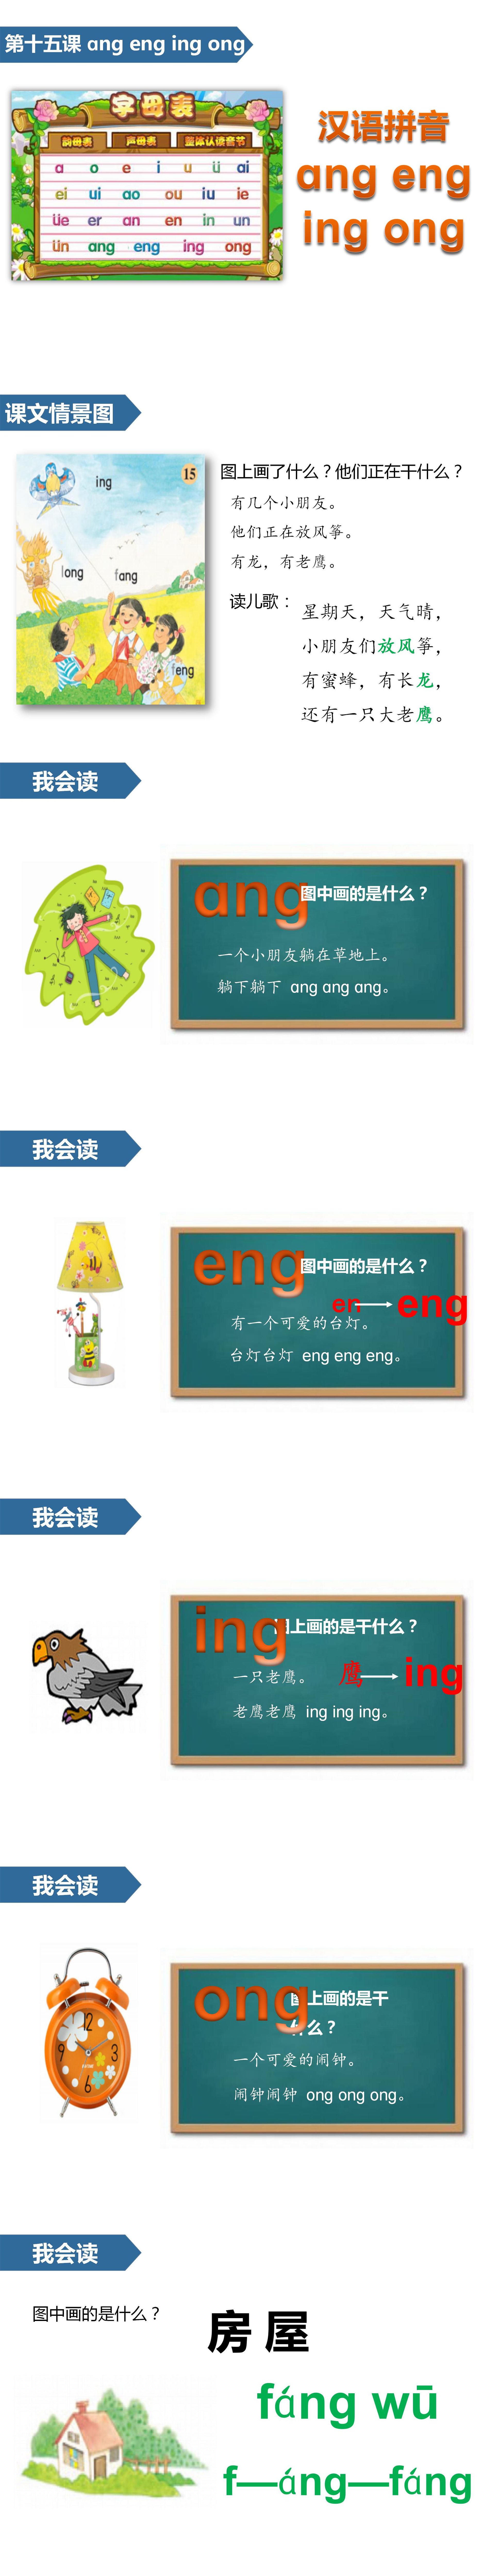 小学语文课件《angengingong》汉语拼音PPT模板PPT课件下载